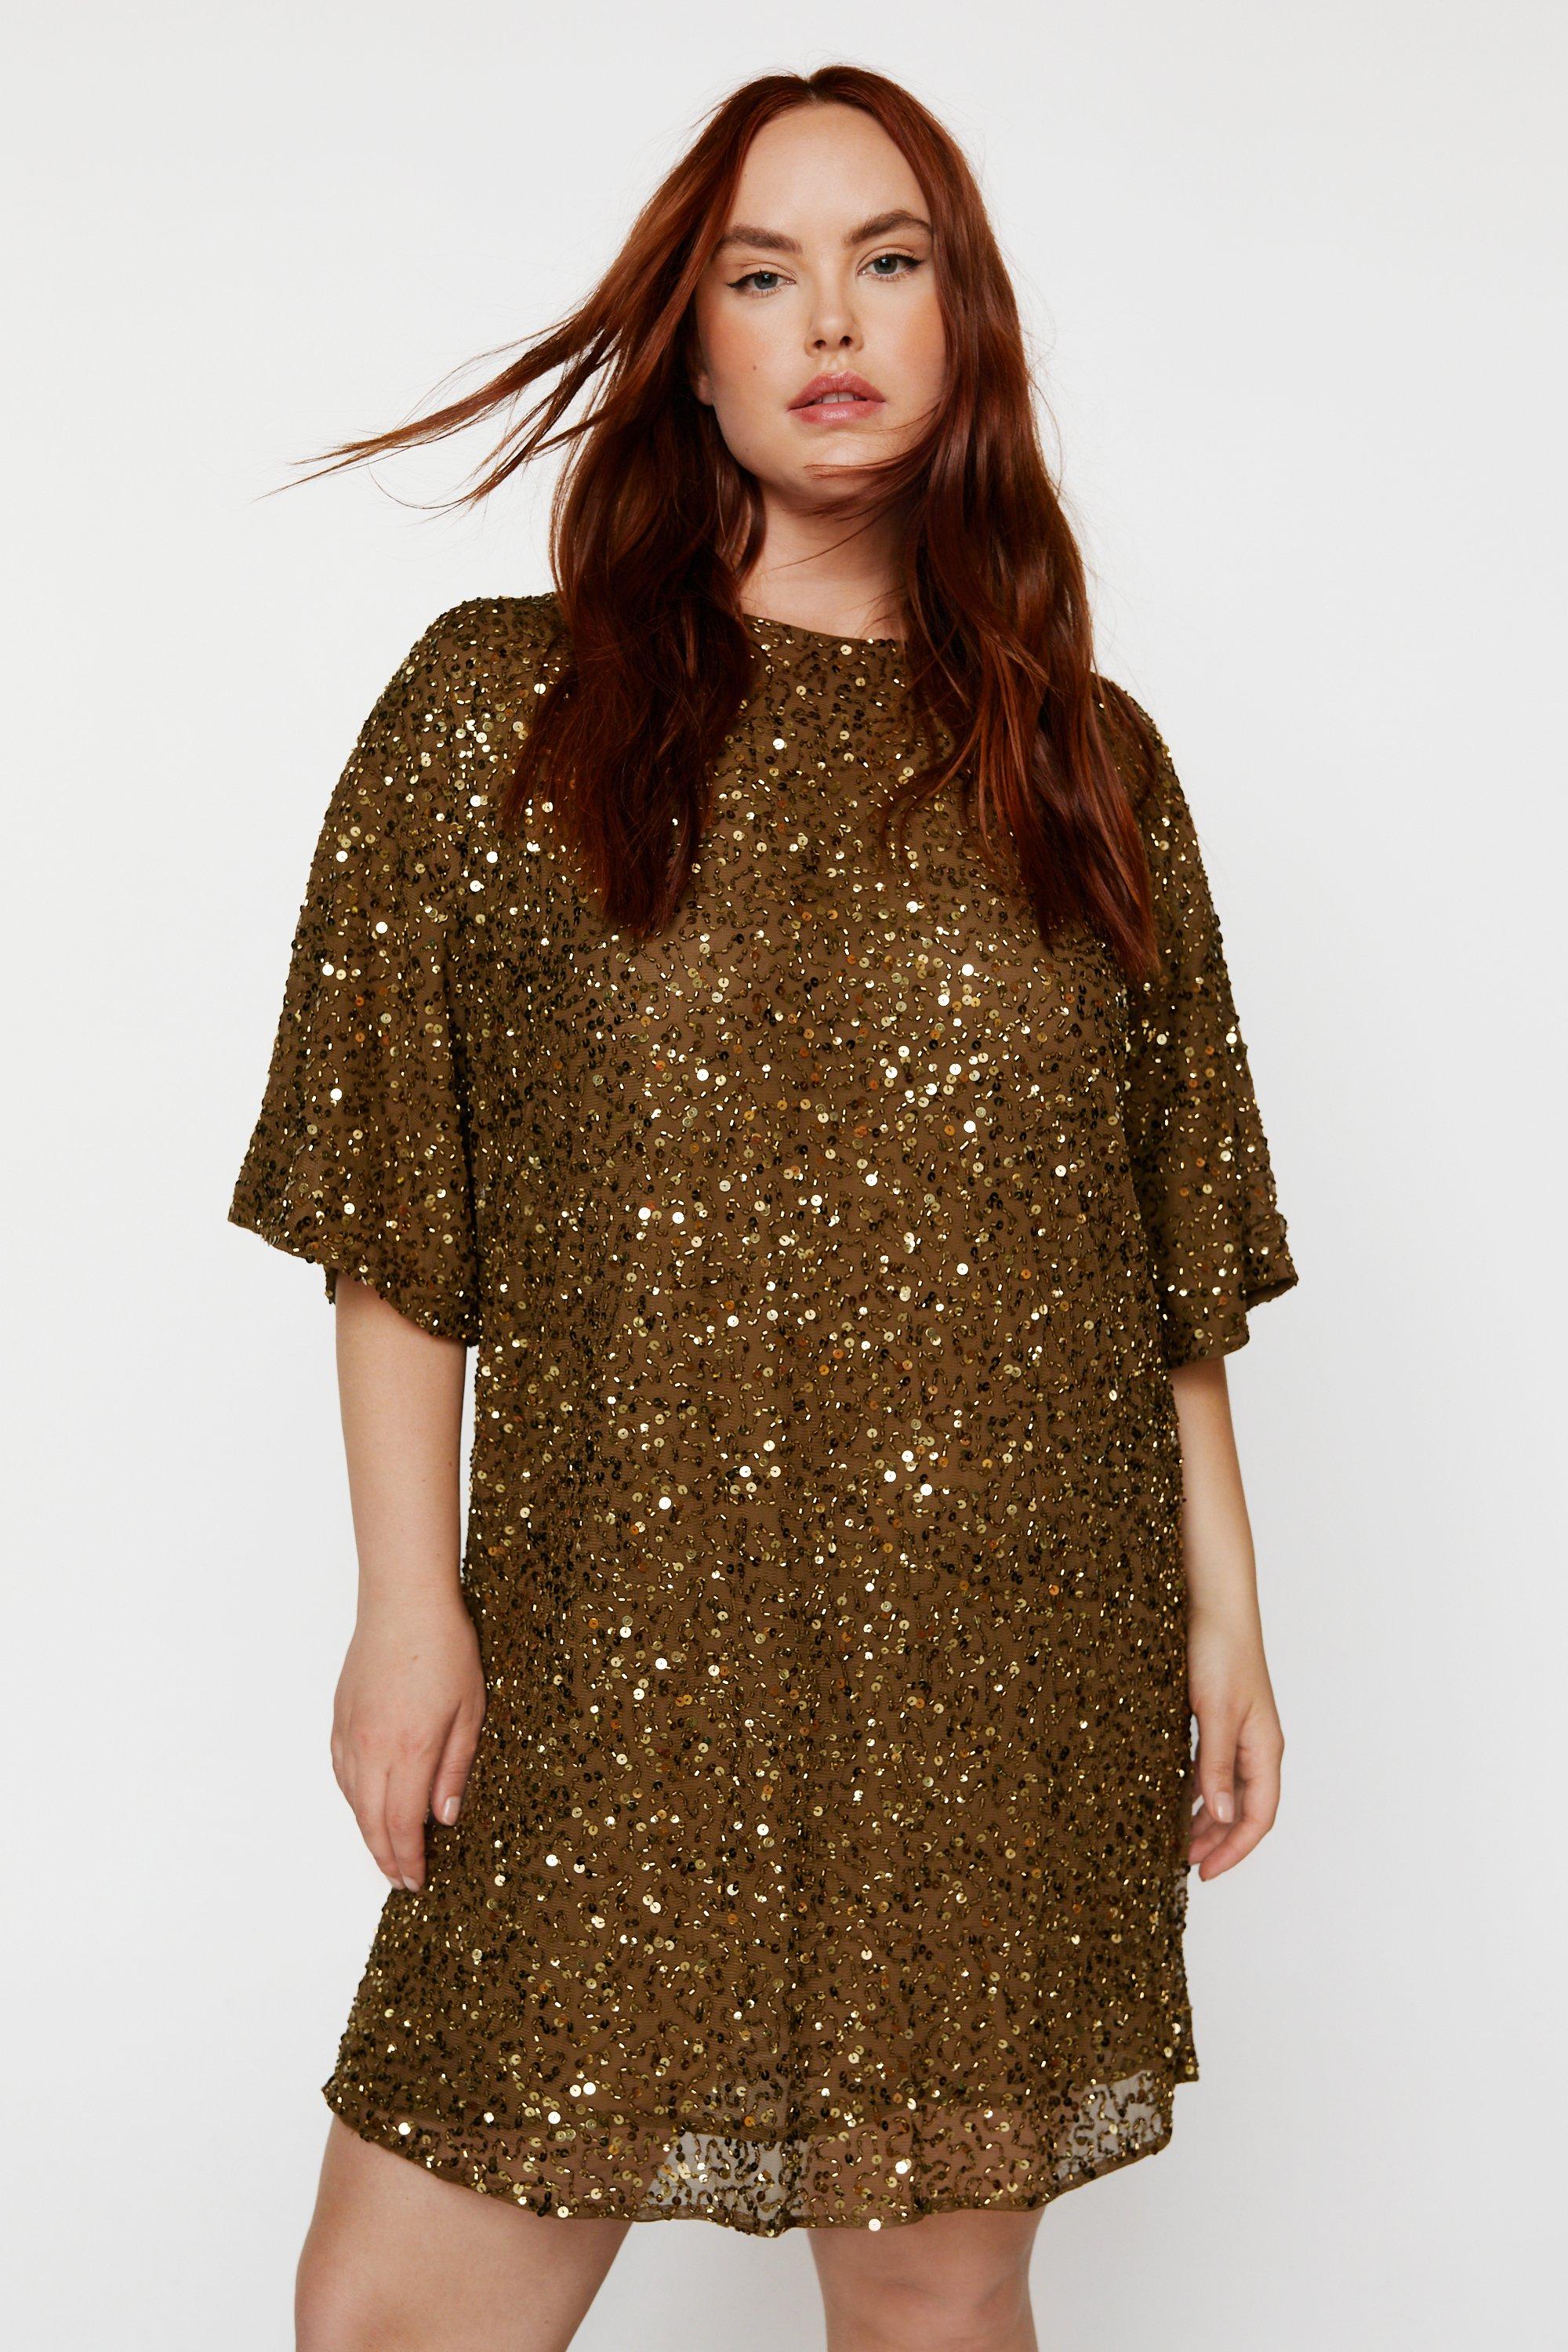 Rose Gold Sequin Dress | Under $40 Holiday Style - joyfully so